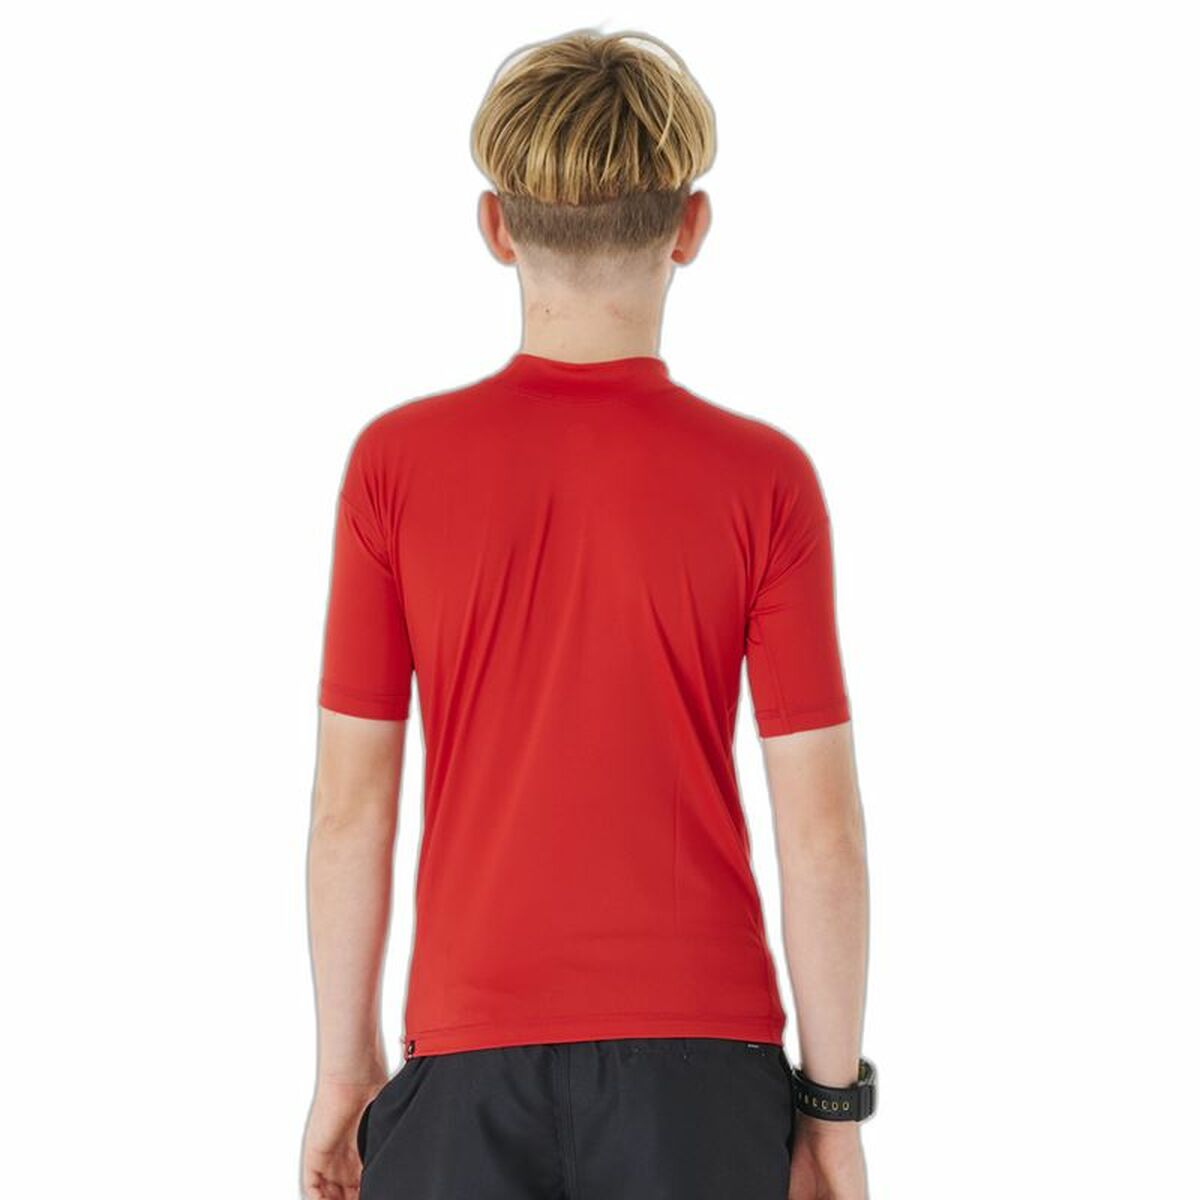 Children’s Short Sleeve T-Shirt Rip Curl Corps L/S Rash Vest  Red Lycra Surf